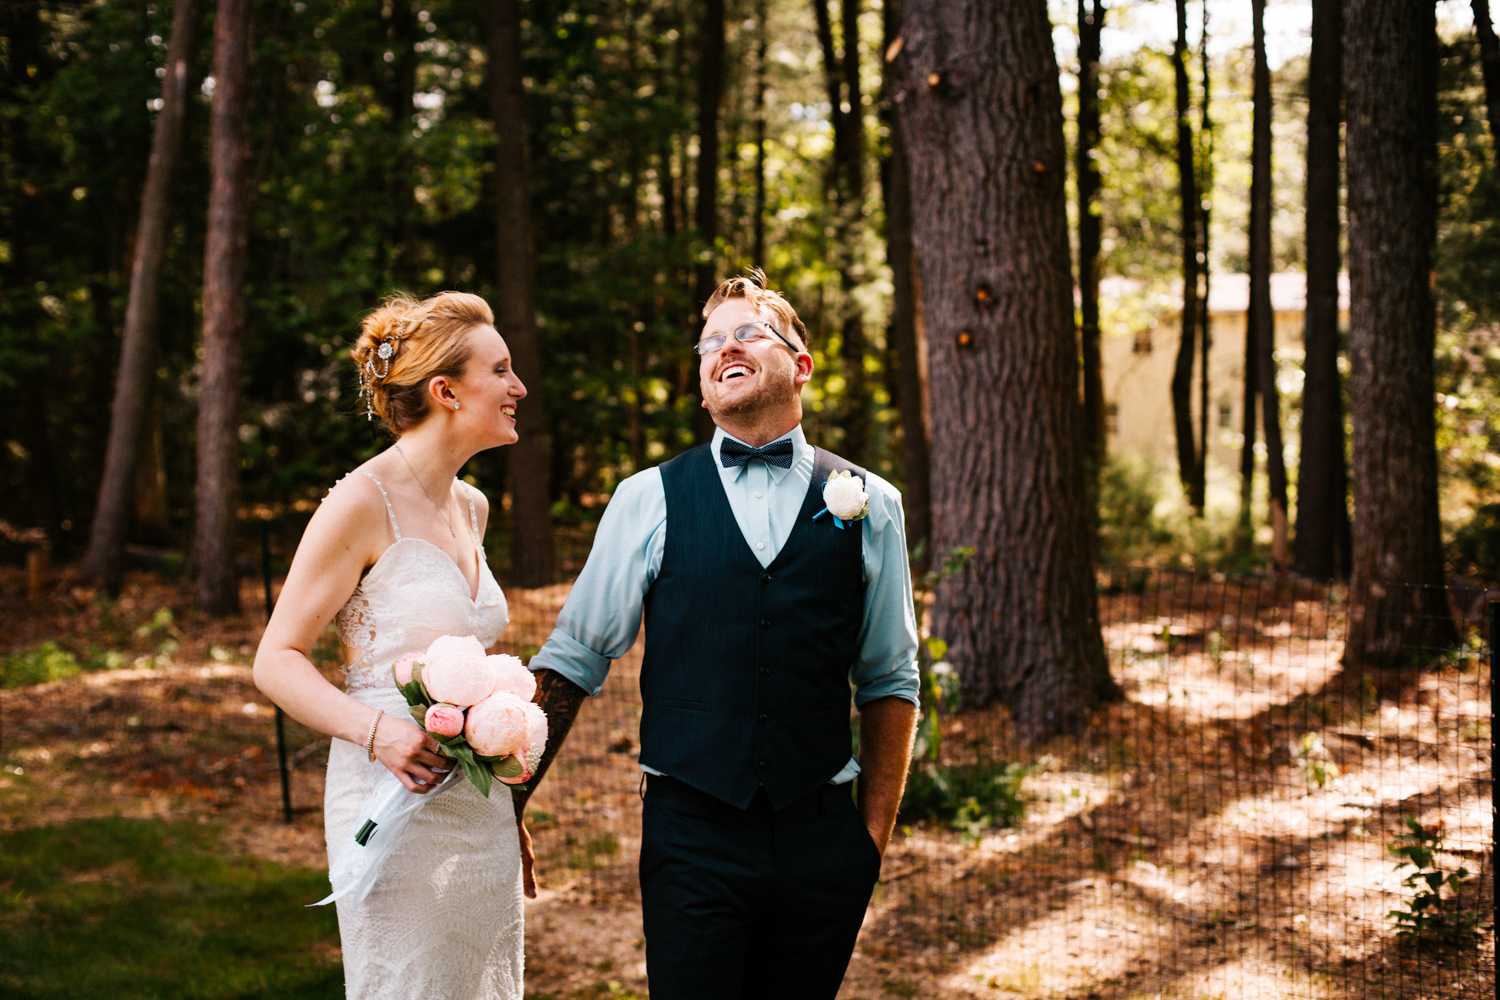 bride-groom-wedding-day-woodland-backyard-laughter-joy-connecticut-new-england-granby-photographer-photography.jpg